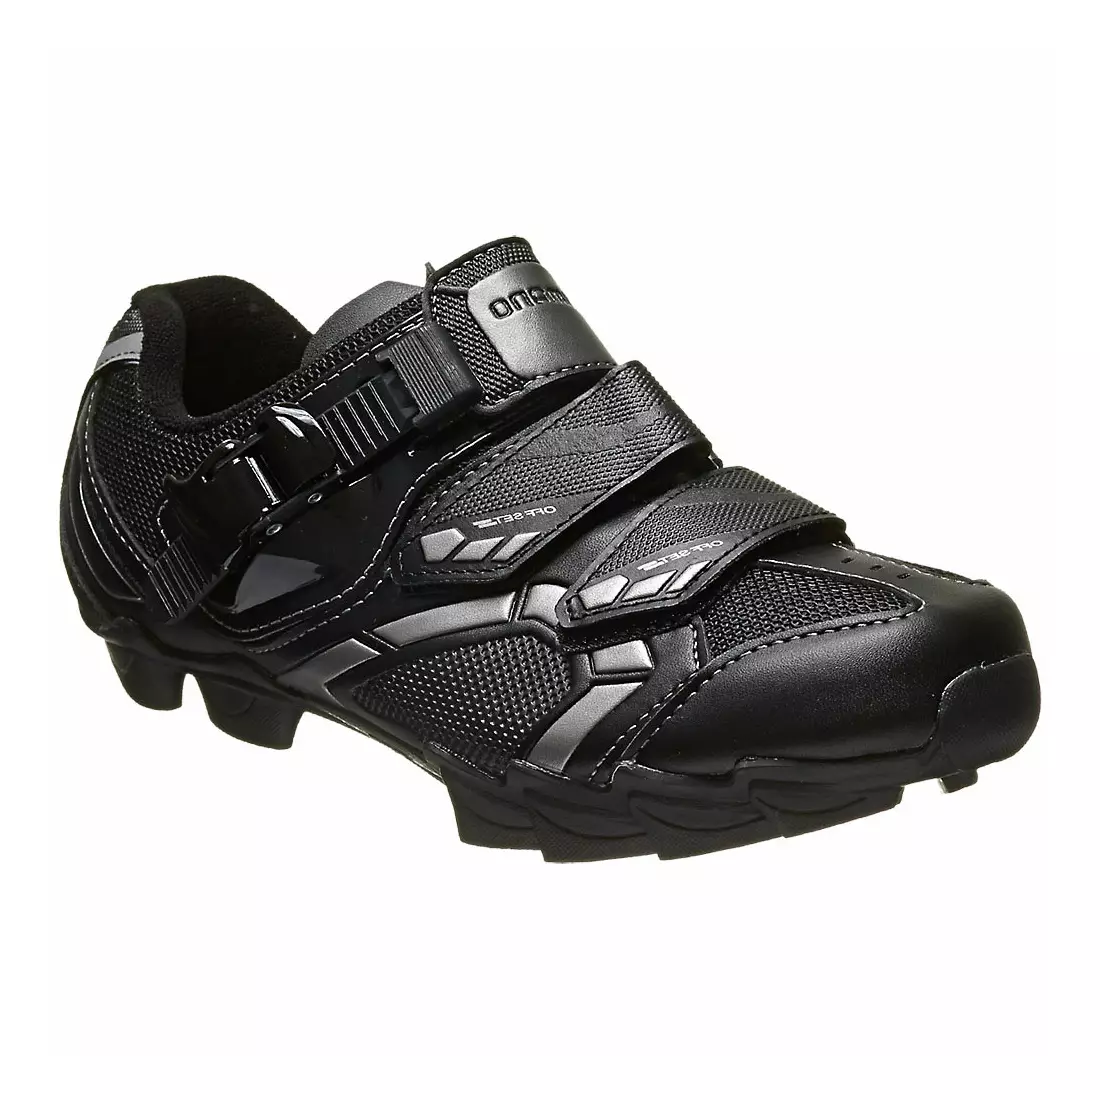 SHIMANO SH-WM63 - dámské cyklistické boty, barva: černá